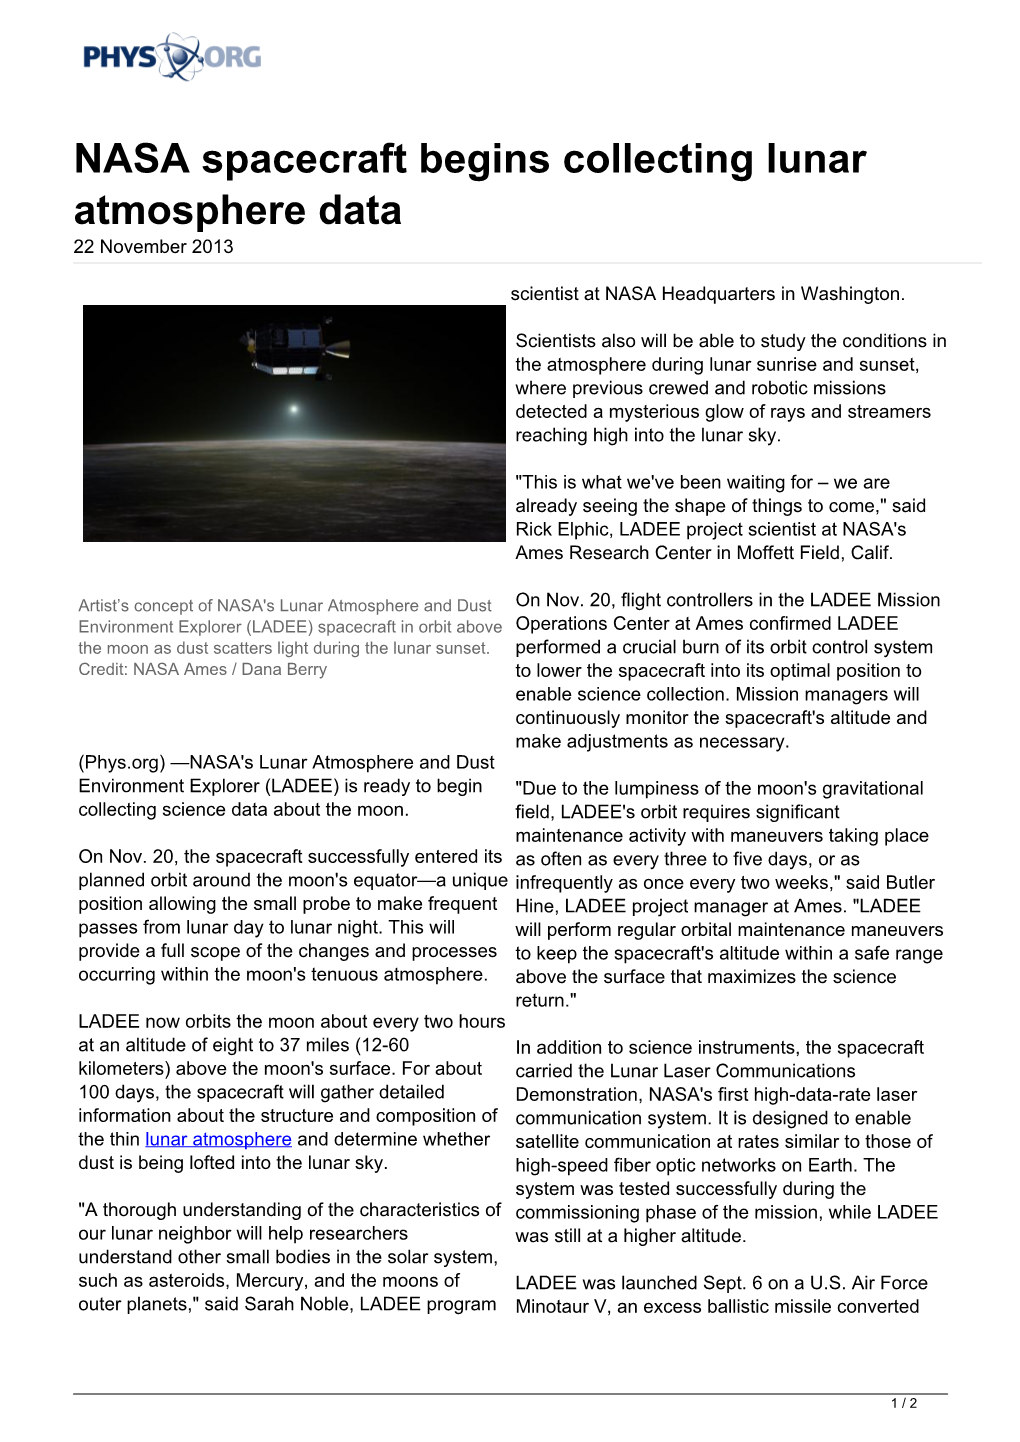 NASA Spacecraft Begins Collecting Lunar Atmosphere Data 22 November 2013